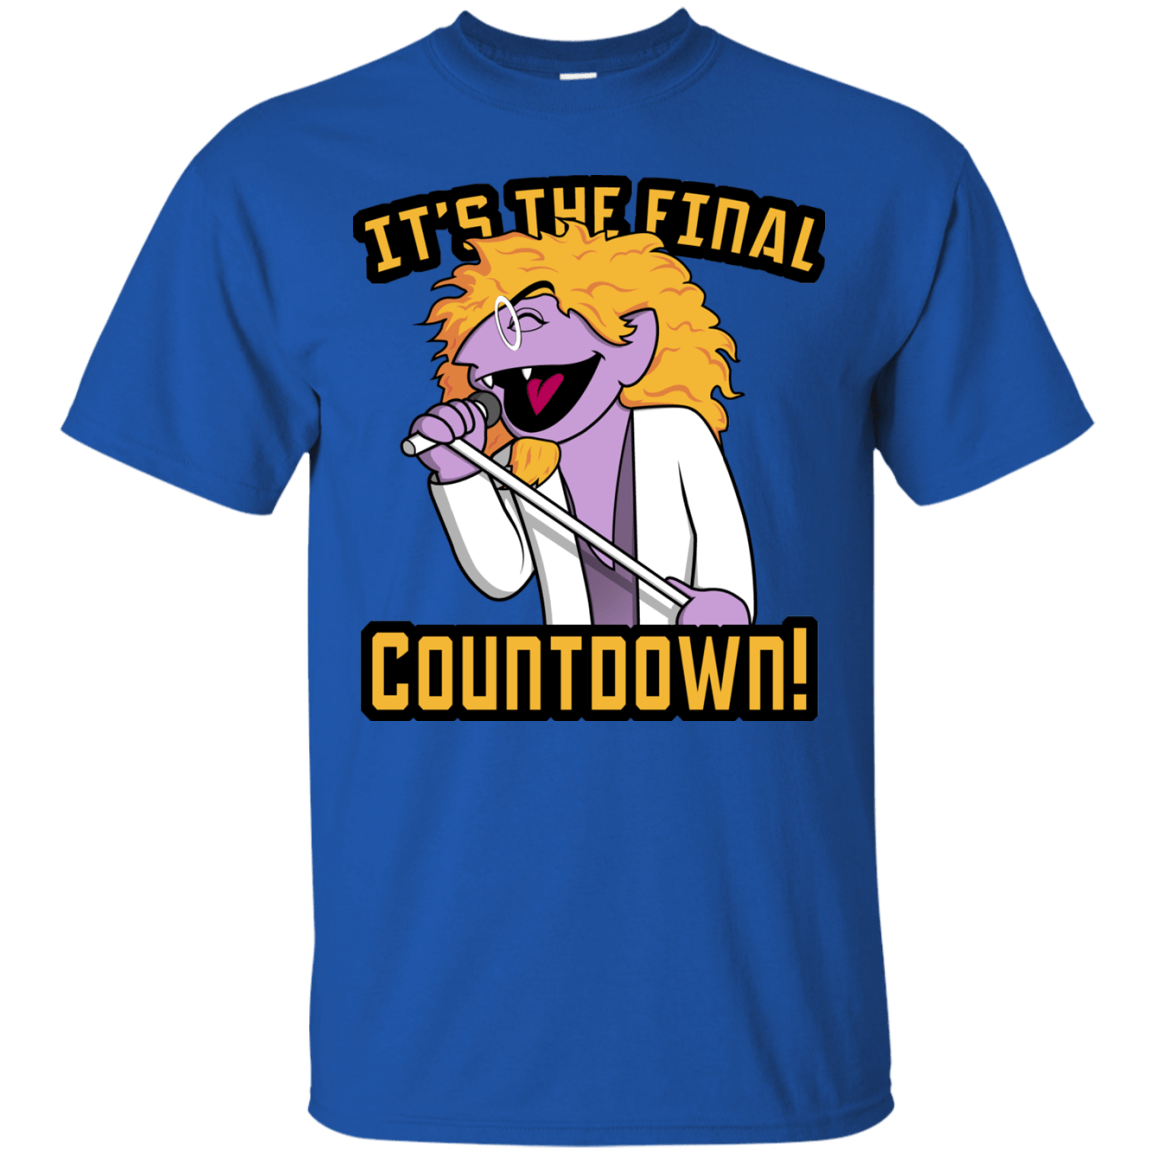 The Final Countdown T-Shirt